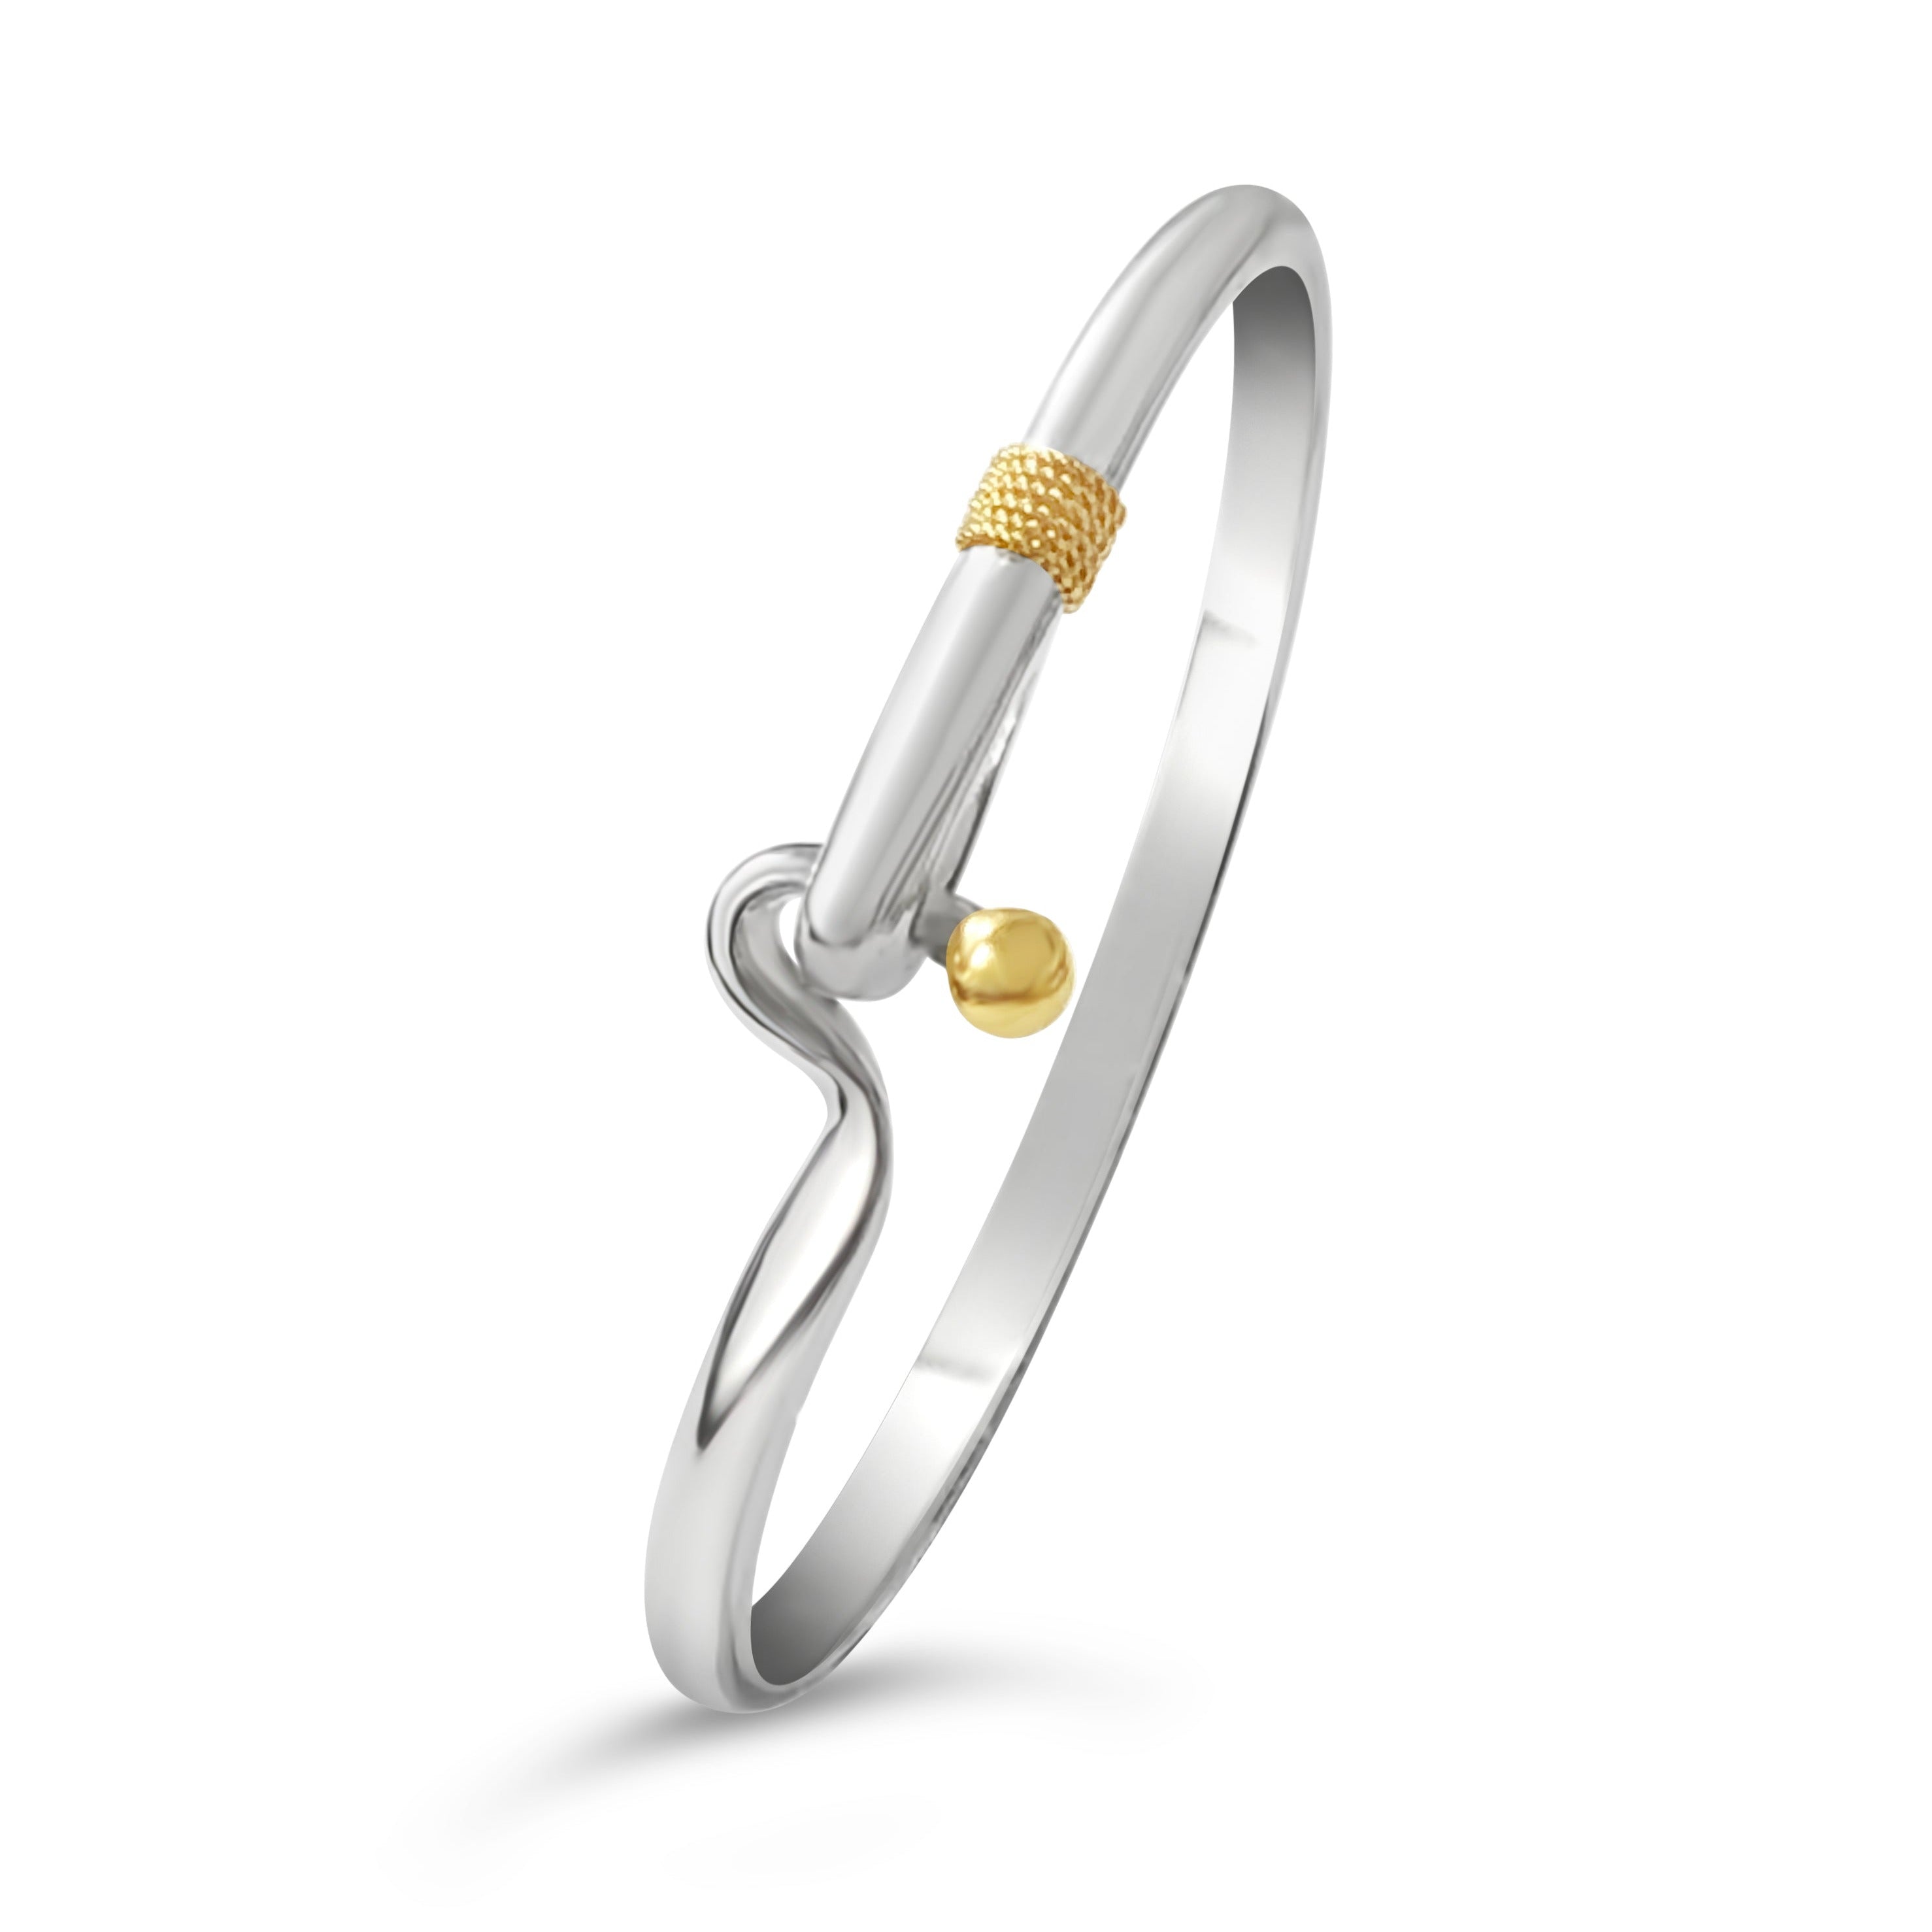 Nautical Cape Cod Hook Bracelet - Silver/Rhodium Gold 7